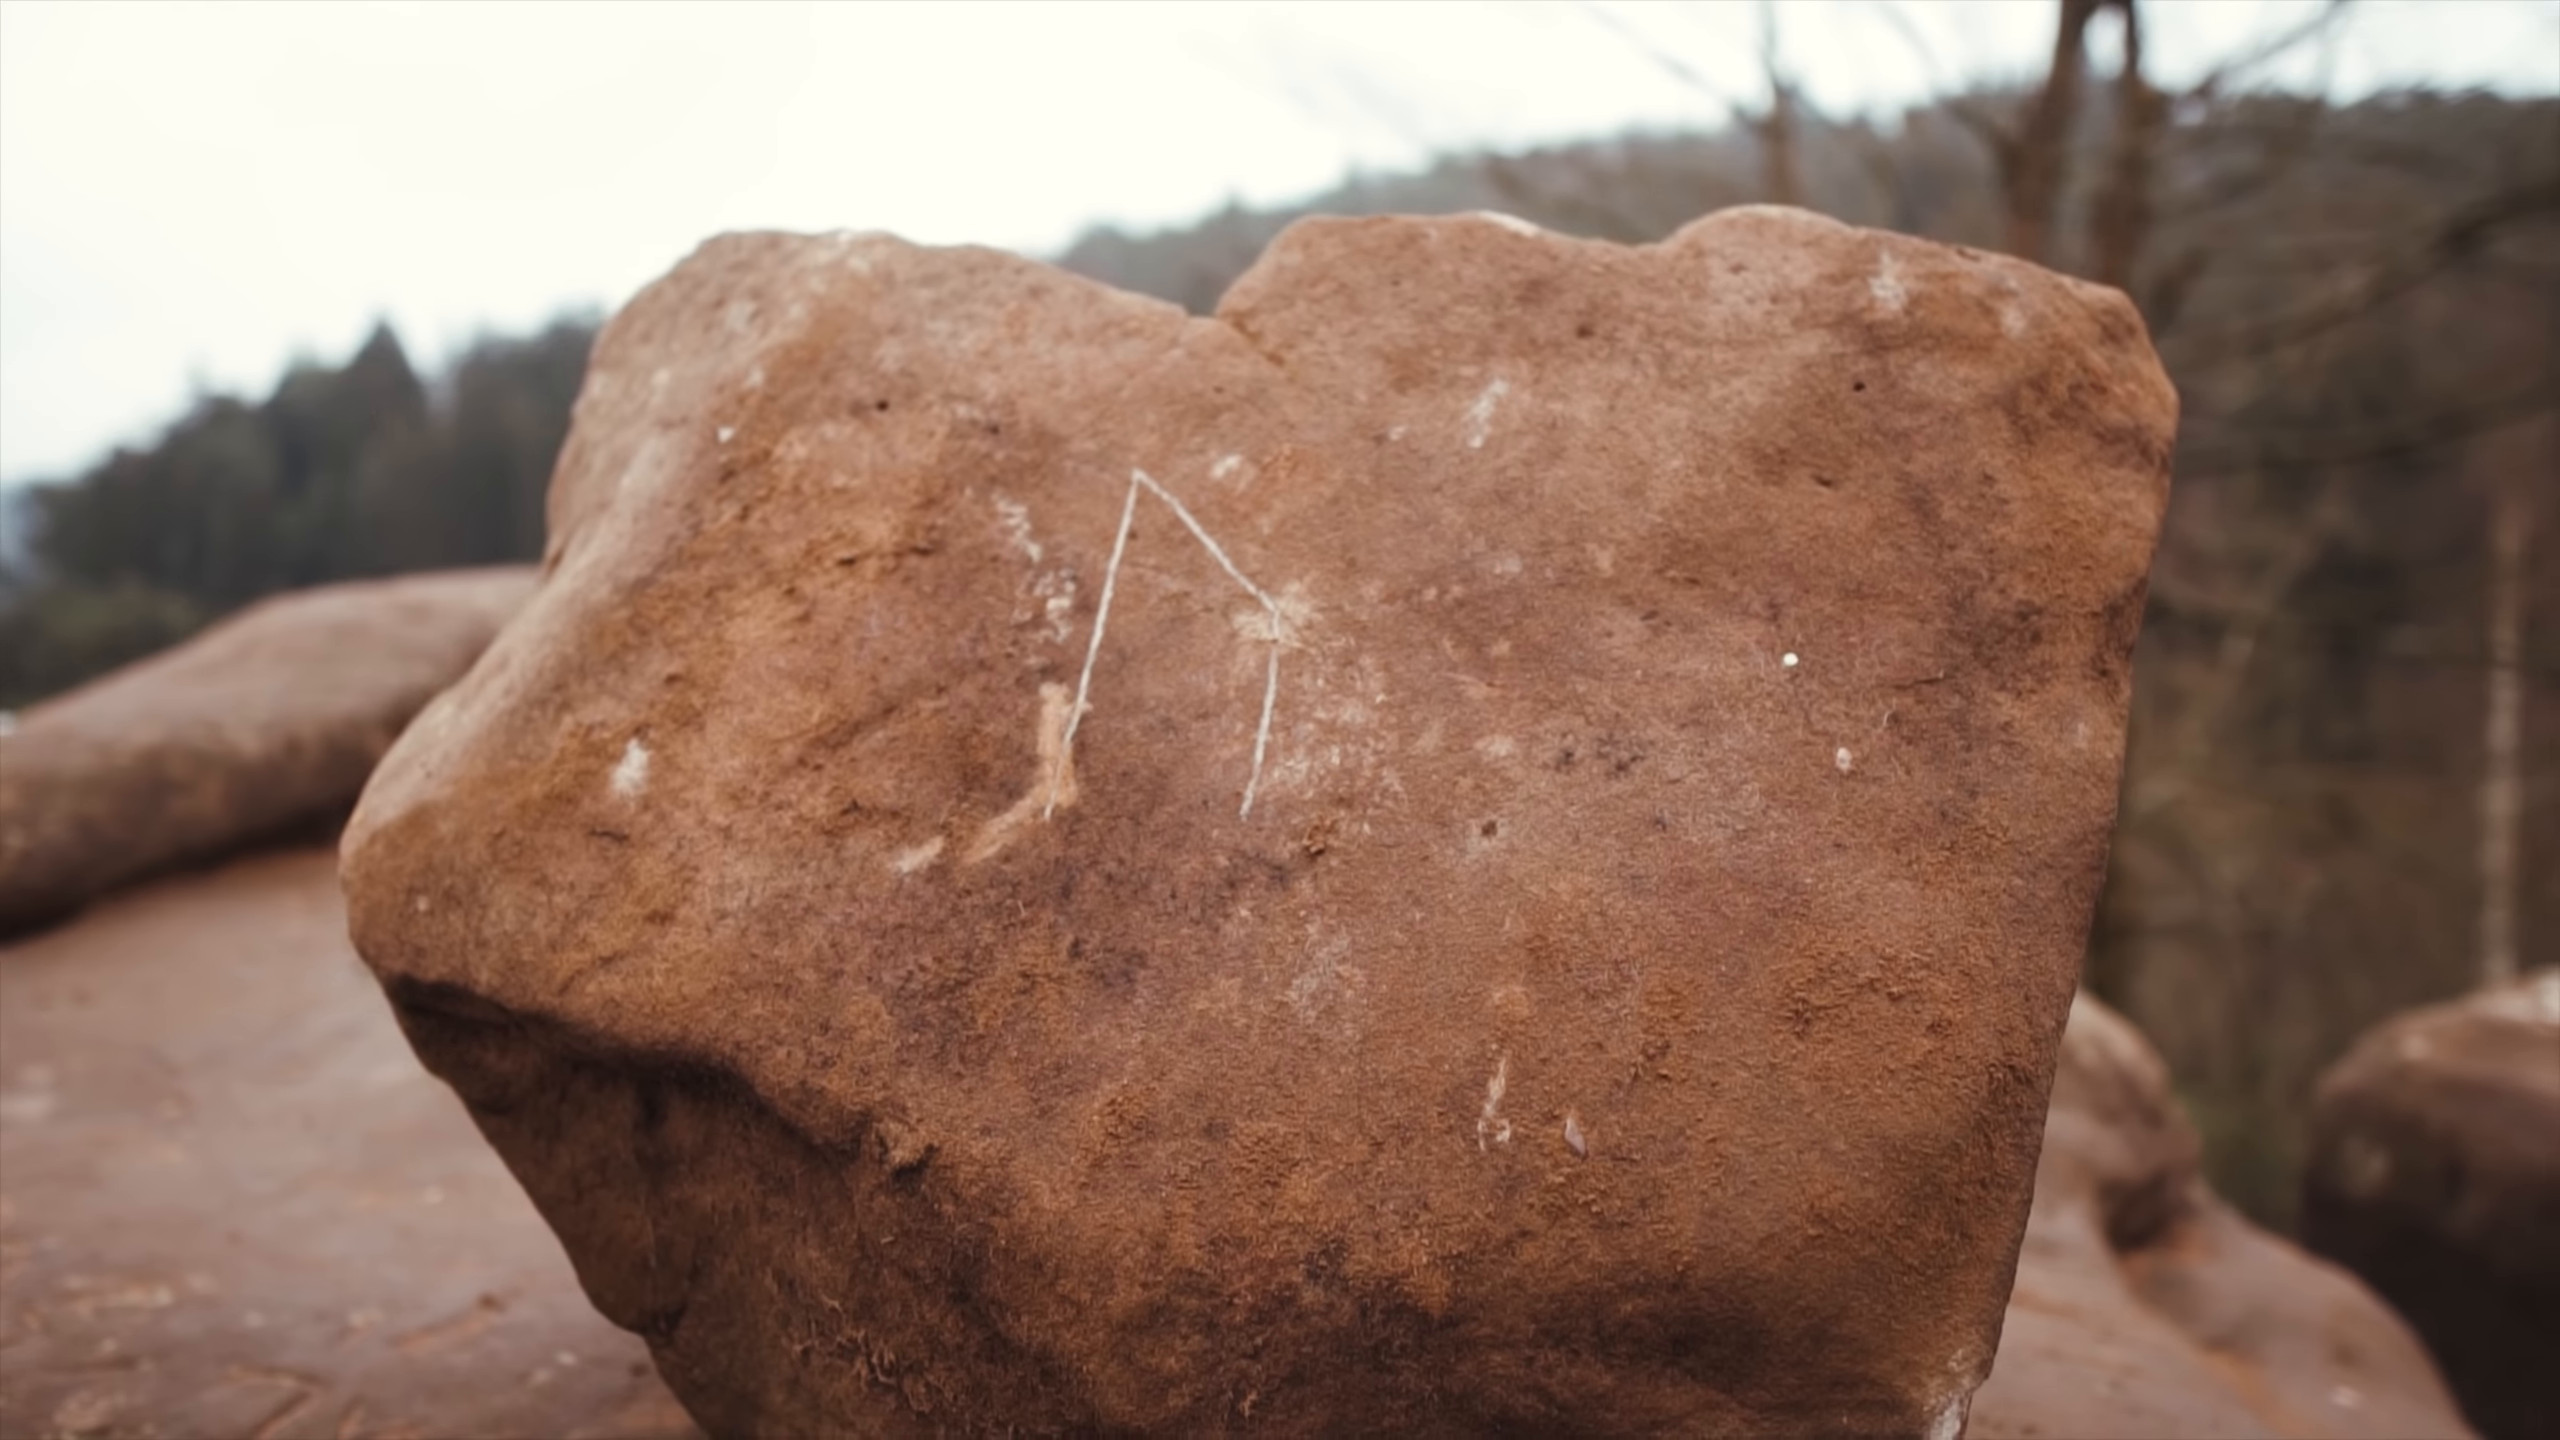 The first Uruz Stone